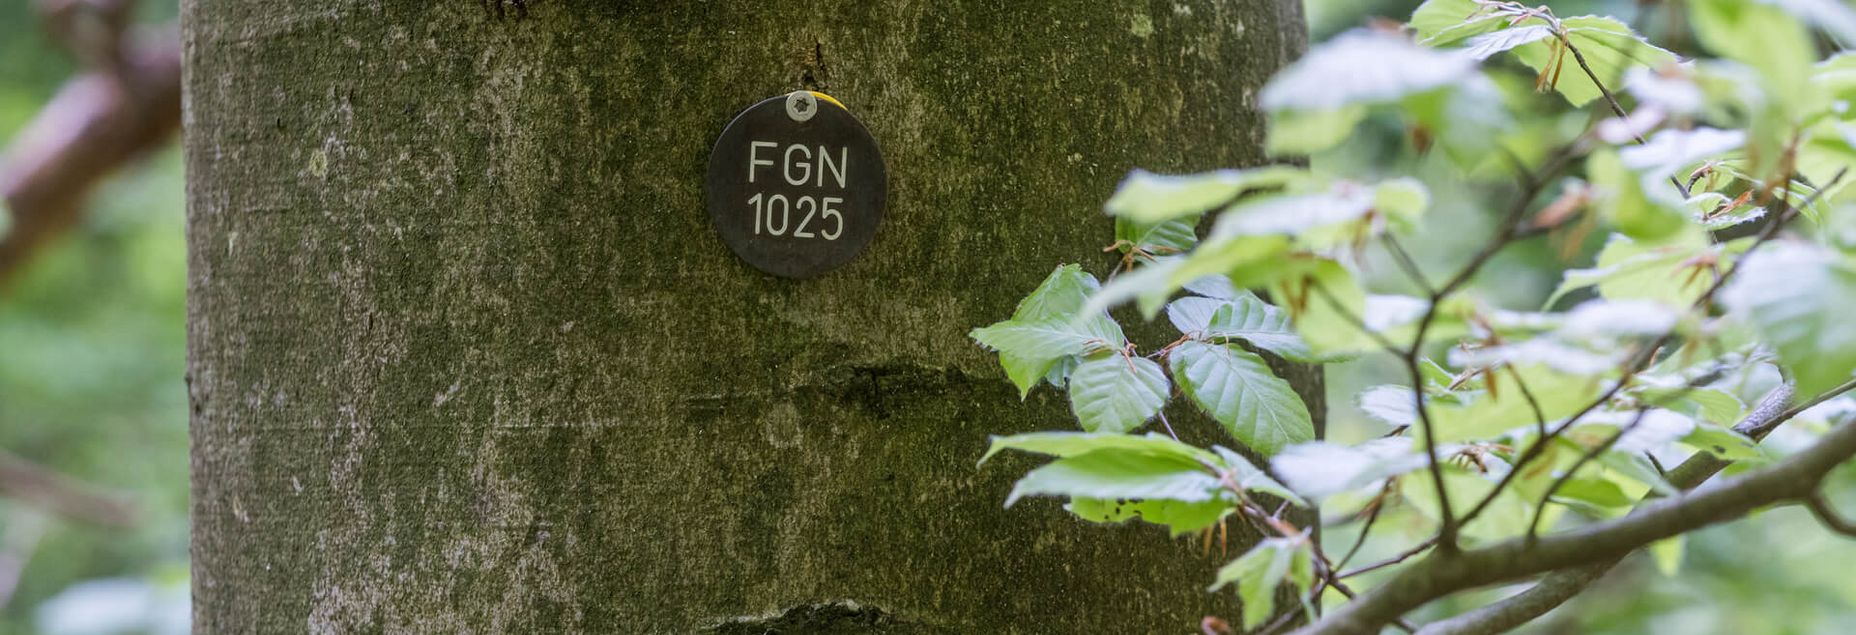 Baum FGN 1025 - Plakette